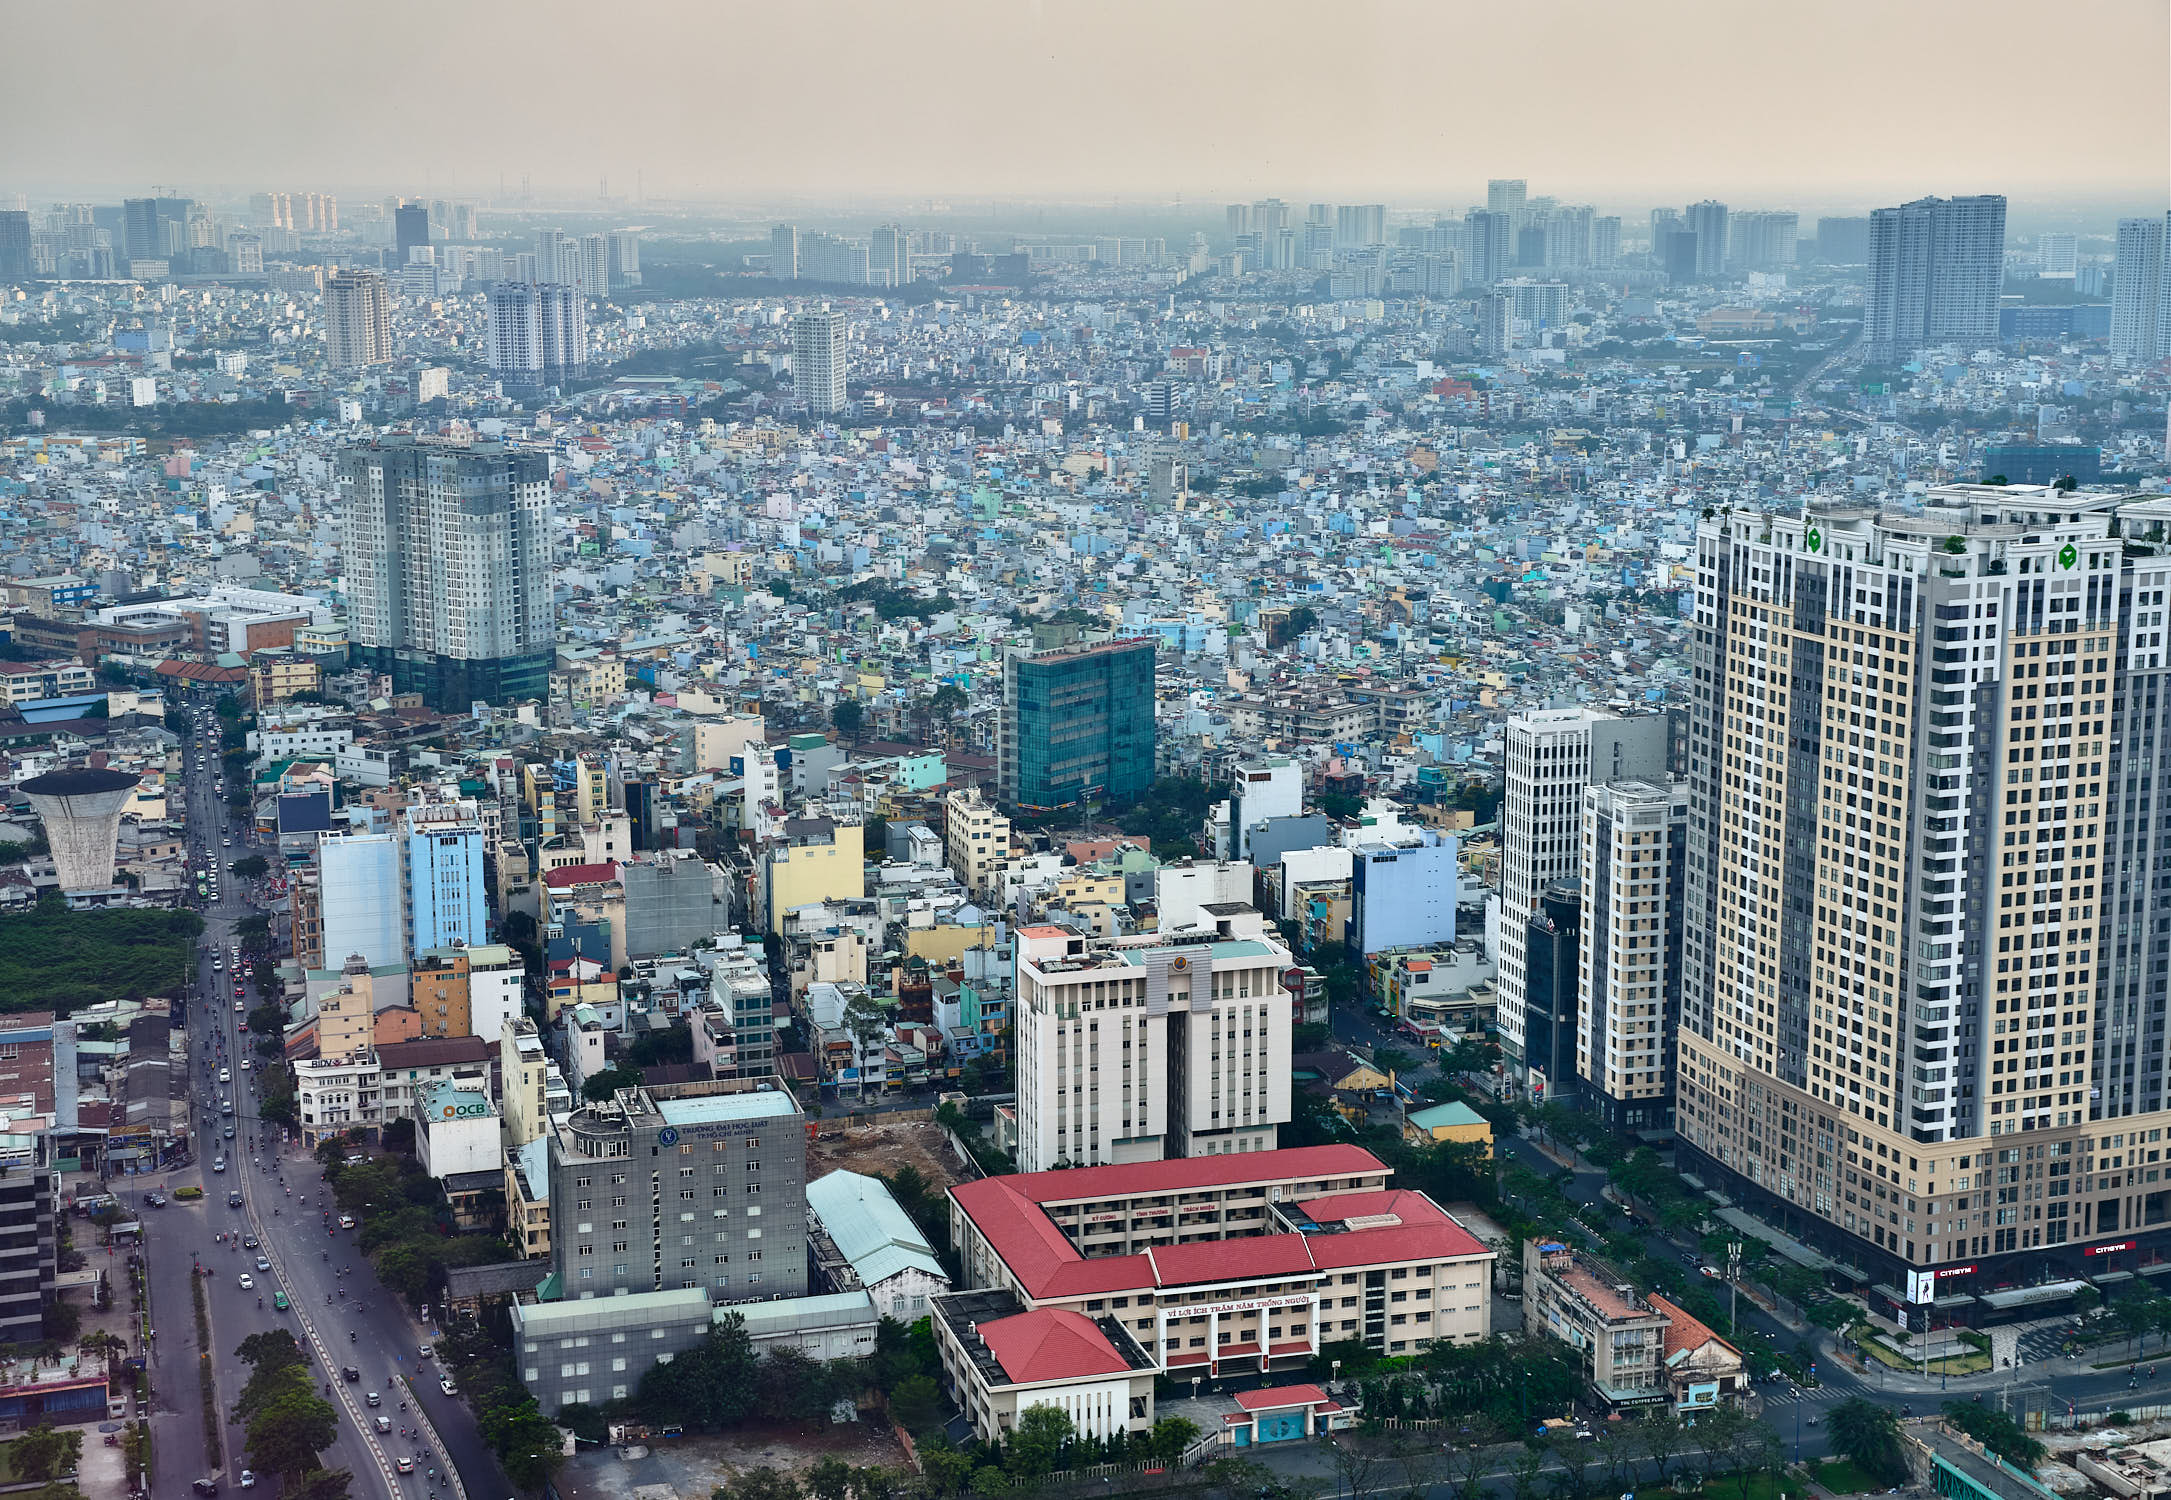 Building as far as the eye can see, Saigon 